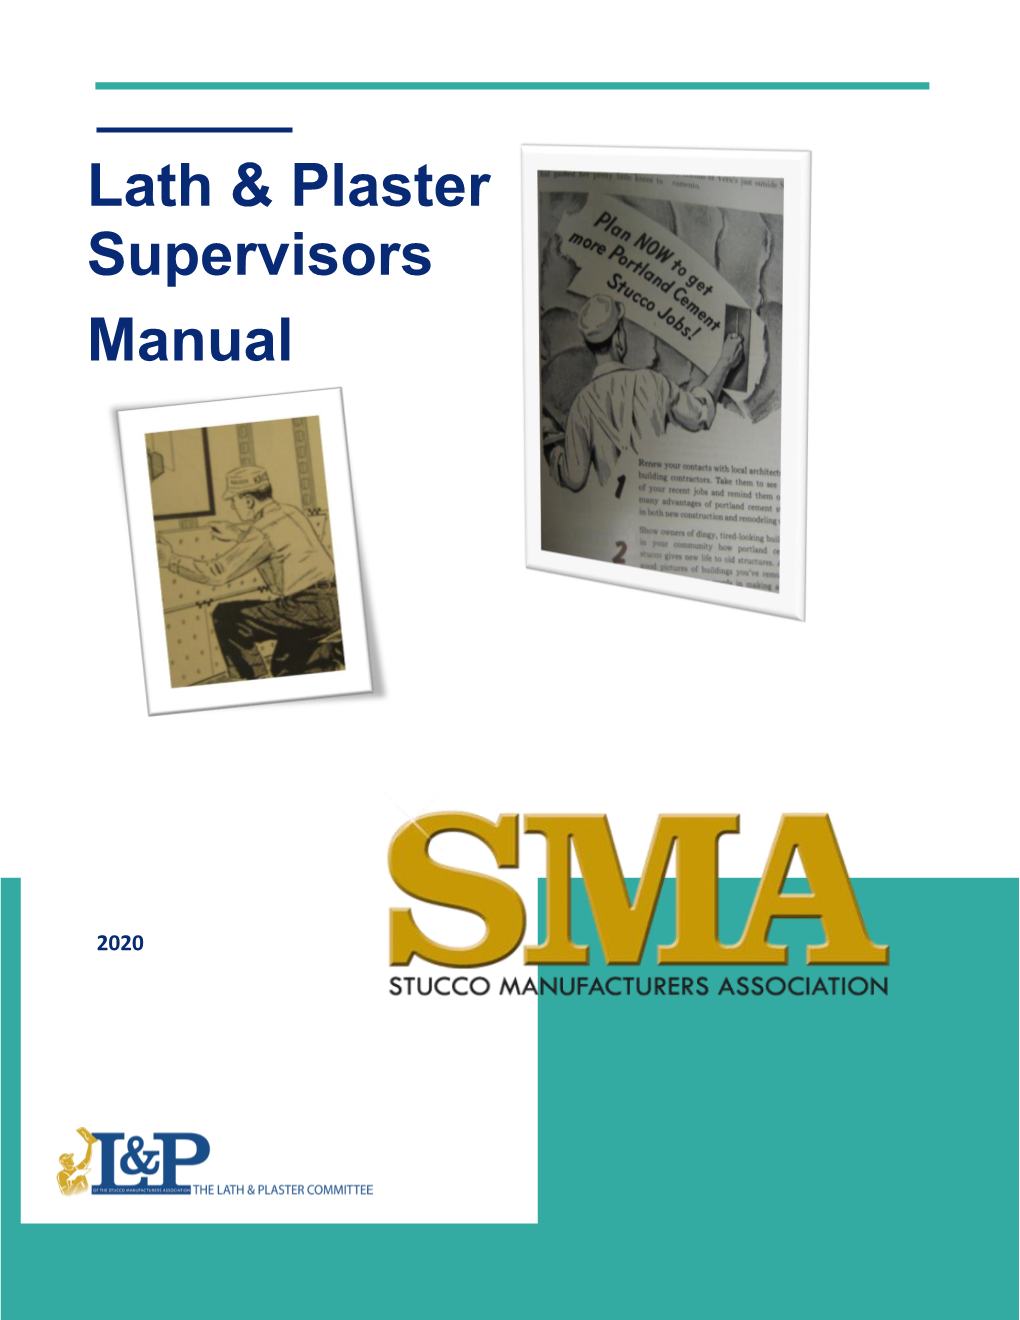 Lath & Plaster Supervisors Manual